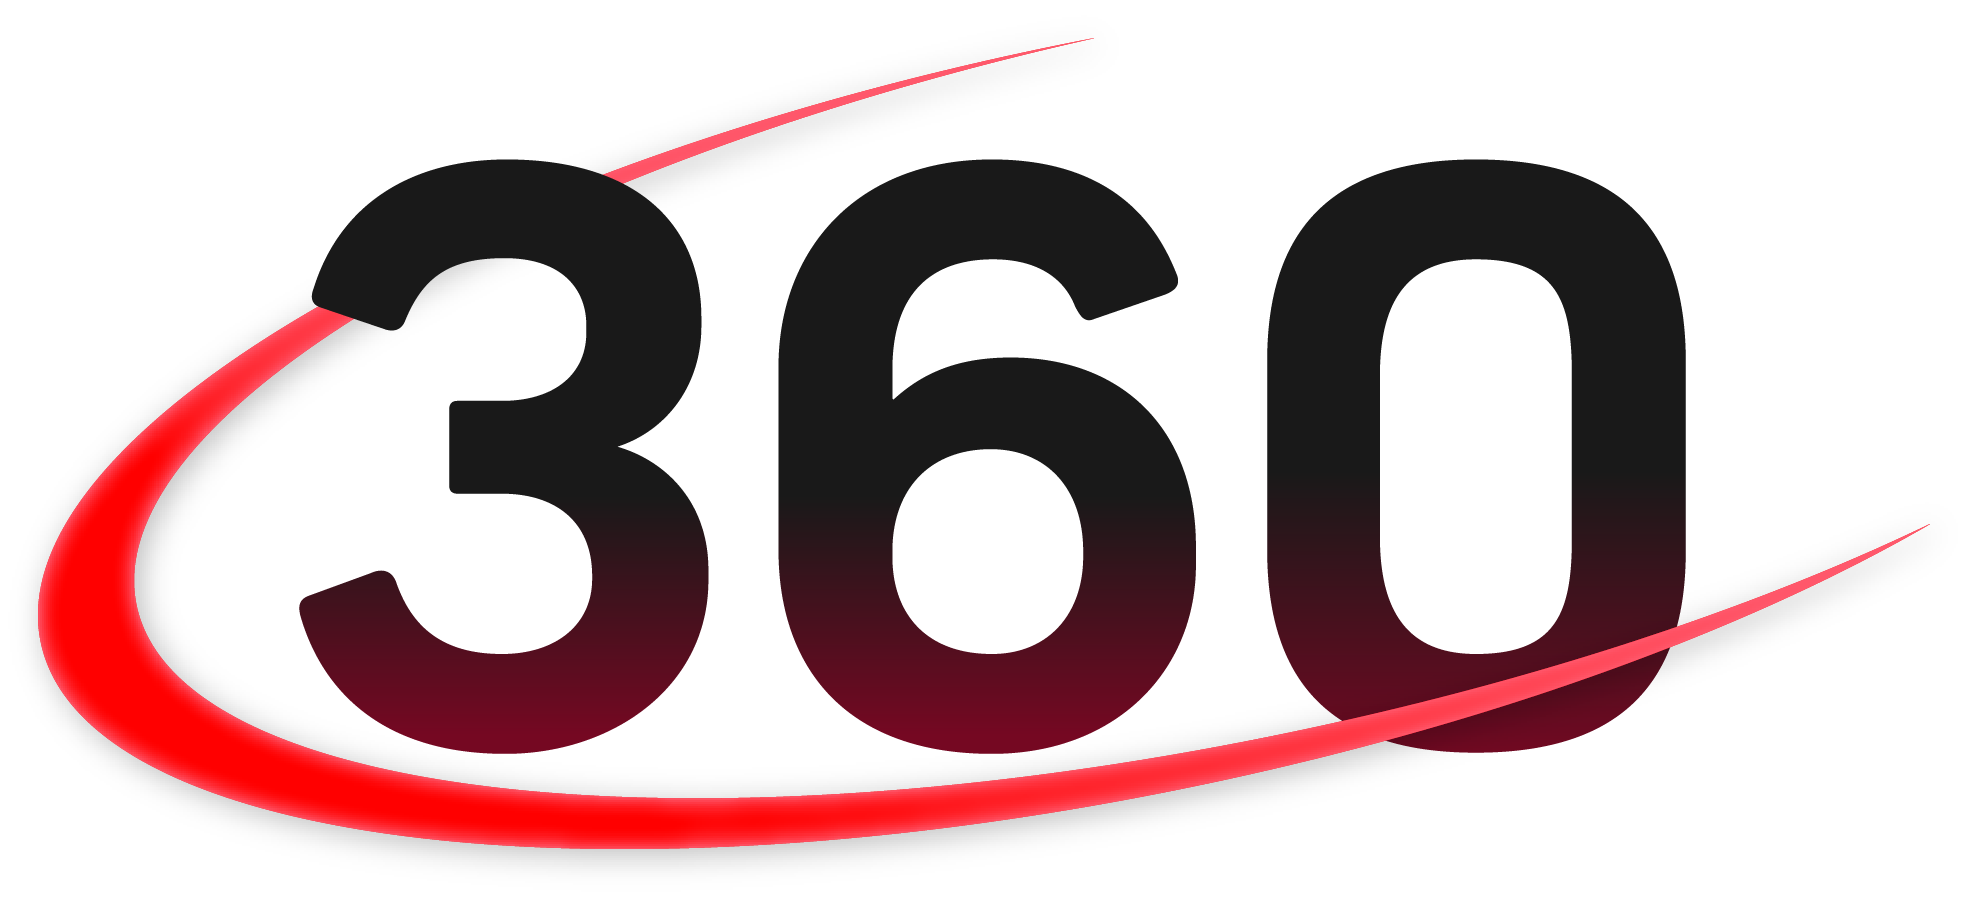 Телеканал 360. 360 Логотип. Канал 360 эмблема. 360 Новости логотип. Часть 360